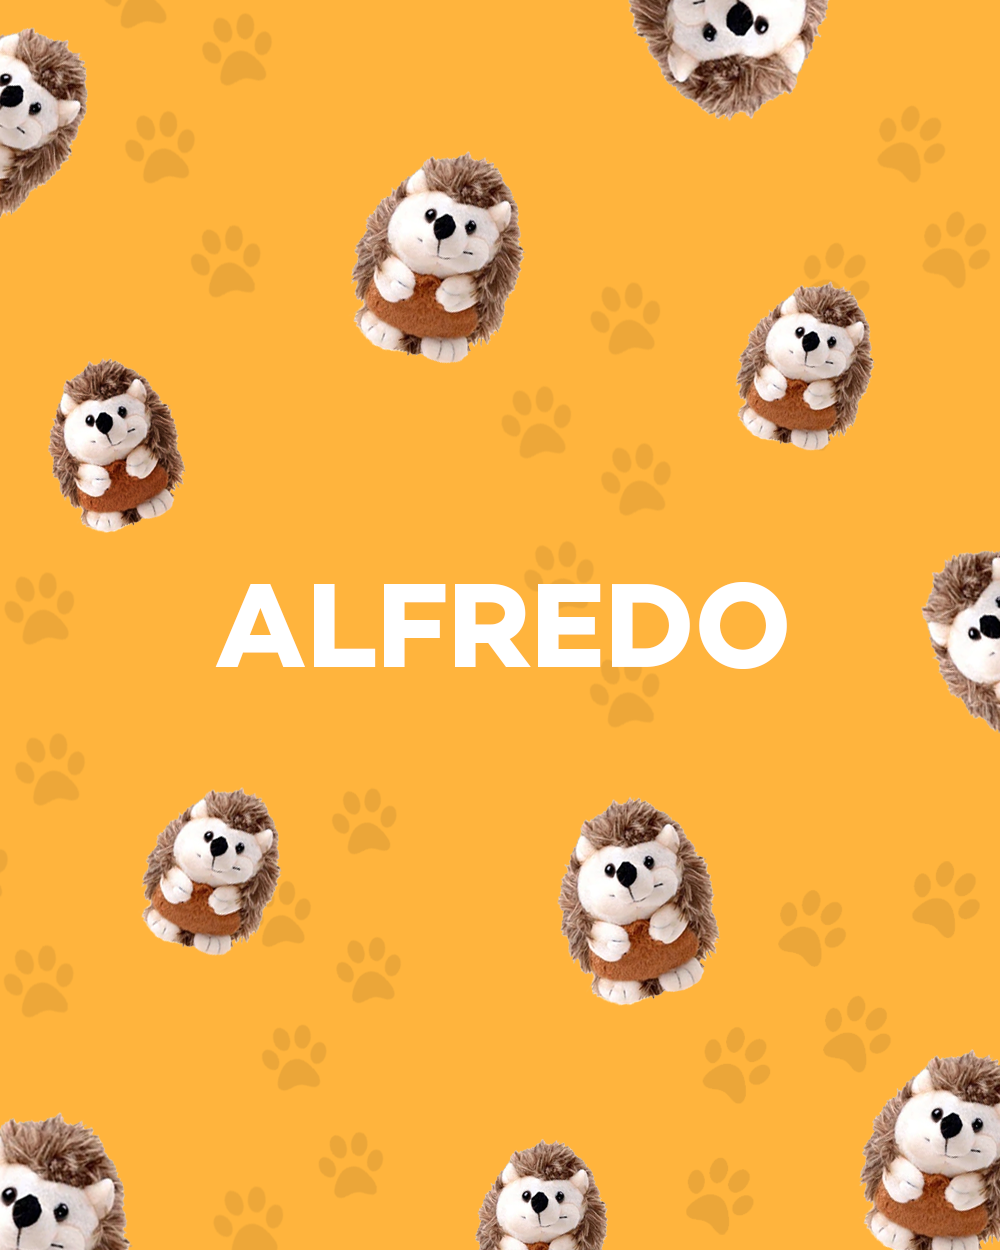 alfredo the hedgehog stuffed animal